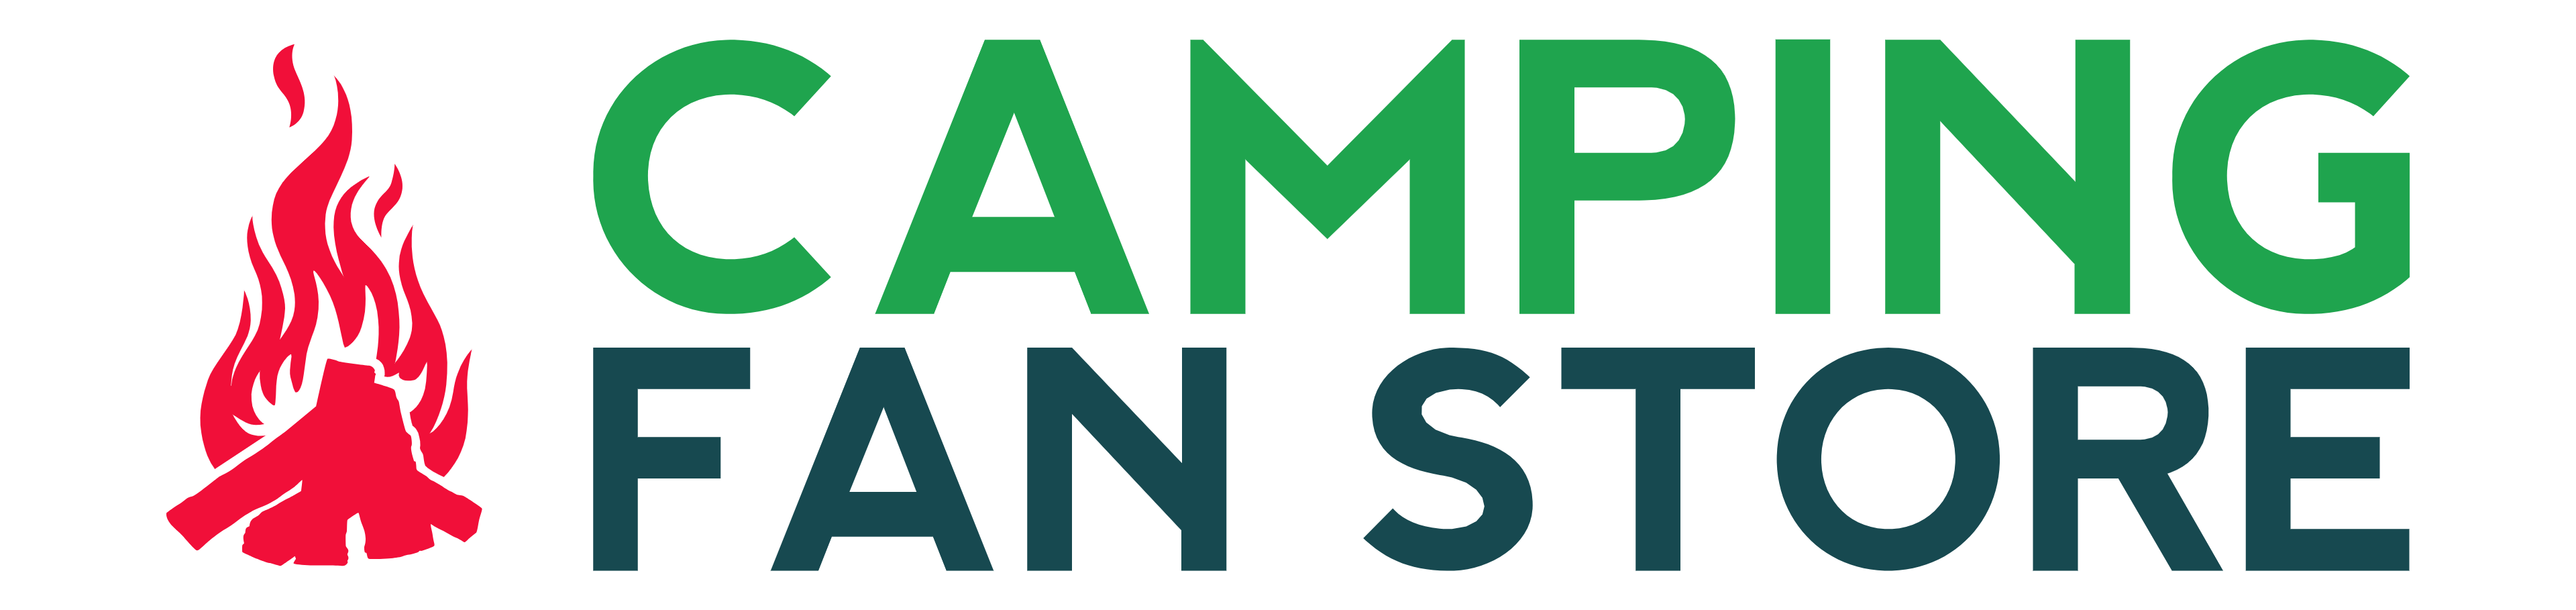 Campingfanstore Logo